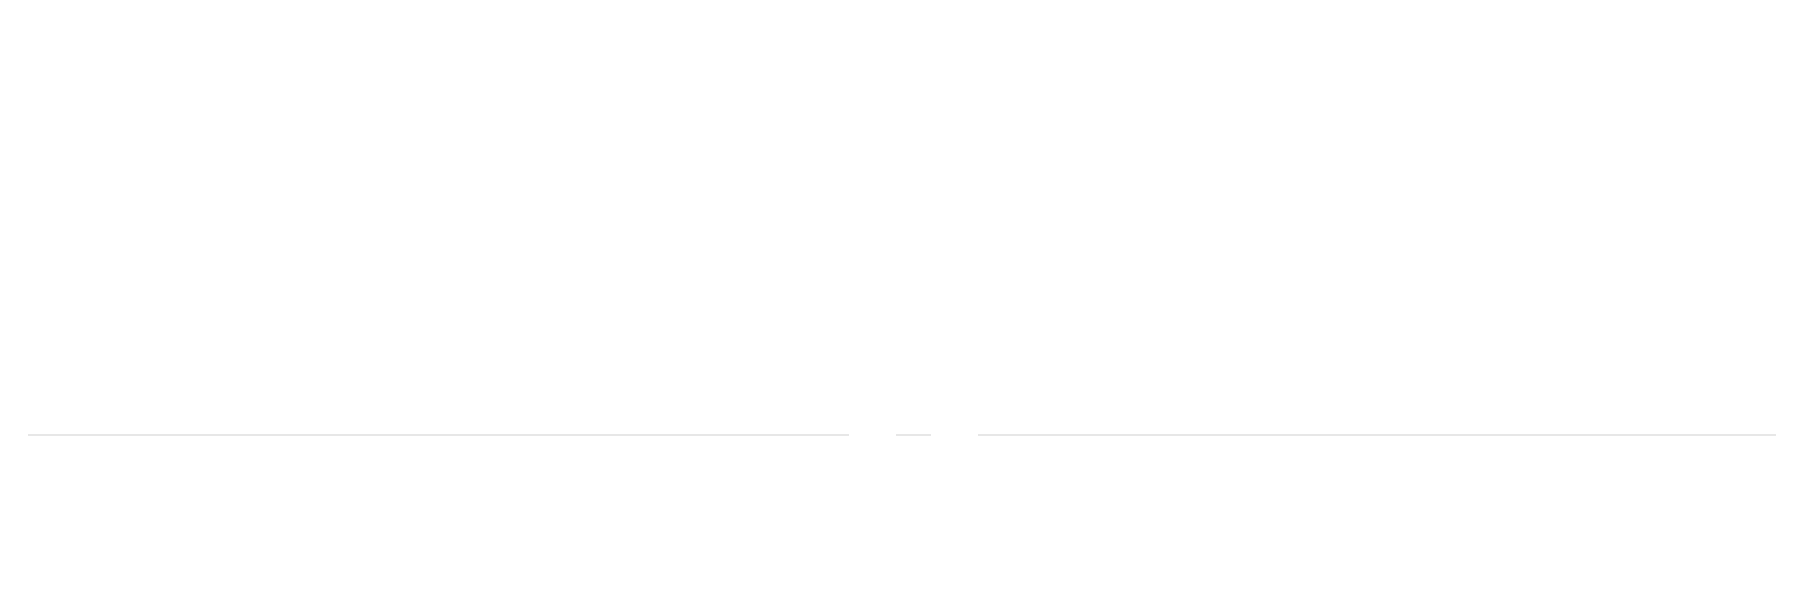 Samantha Meeks Family Practice